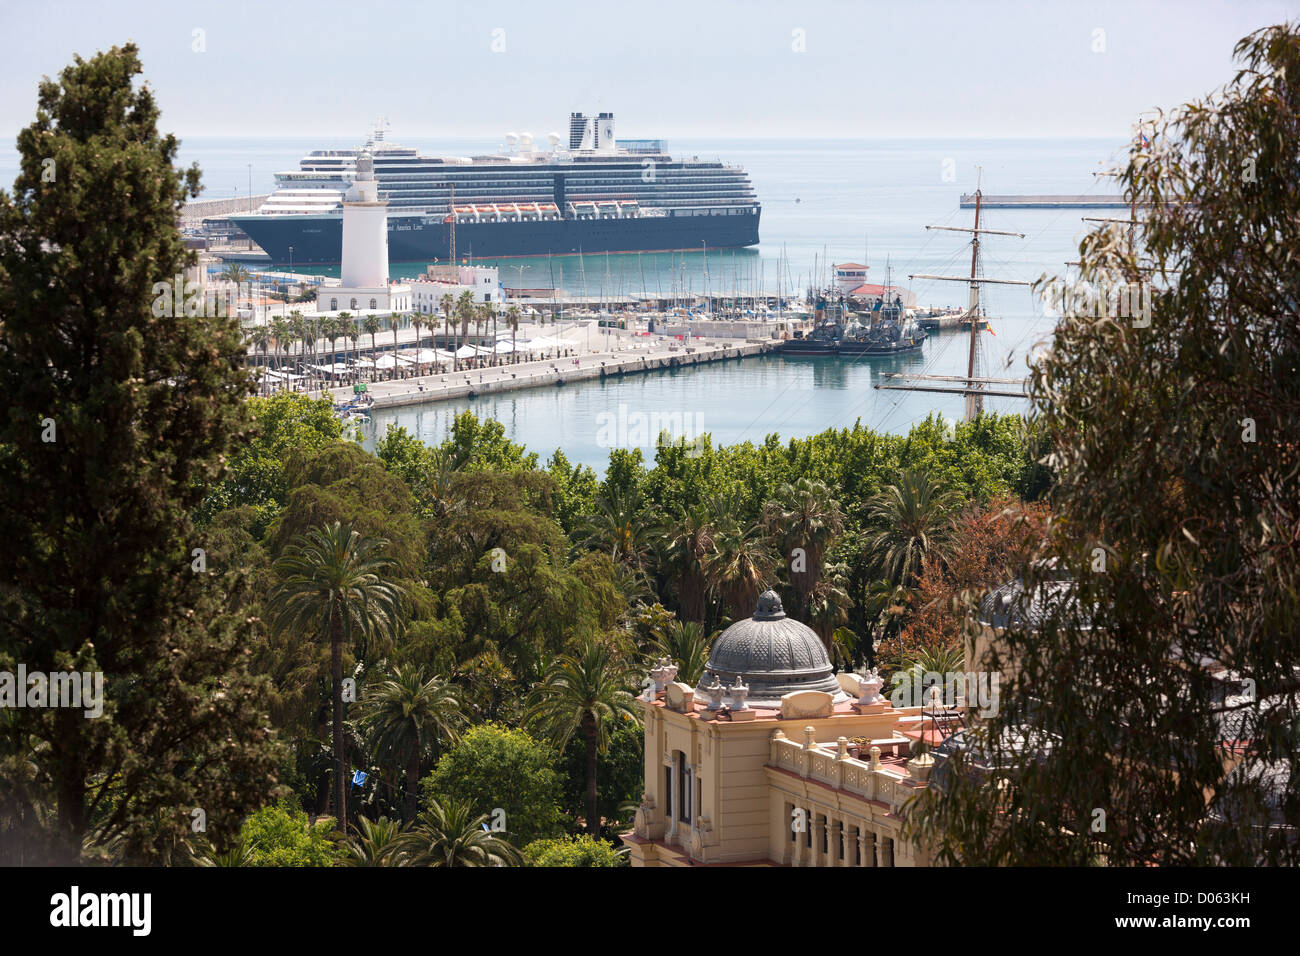 Malaga Spain. Holland America Line cruise ship Noordam at cruise terminal. Harbor harbour new boulevard promenade. Stock Photo